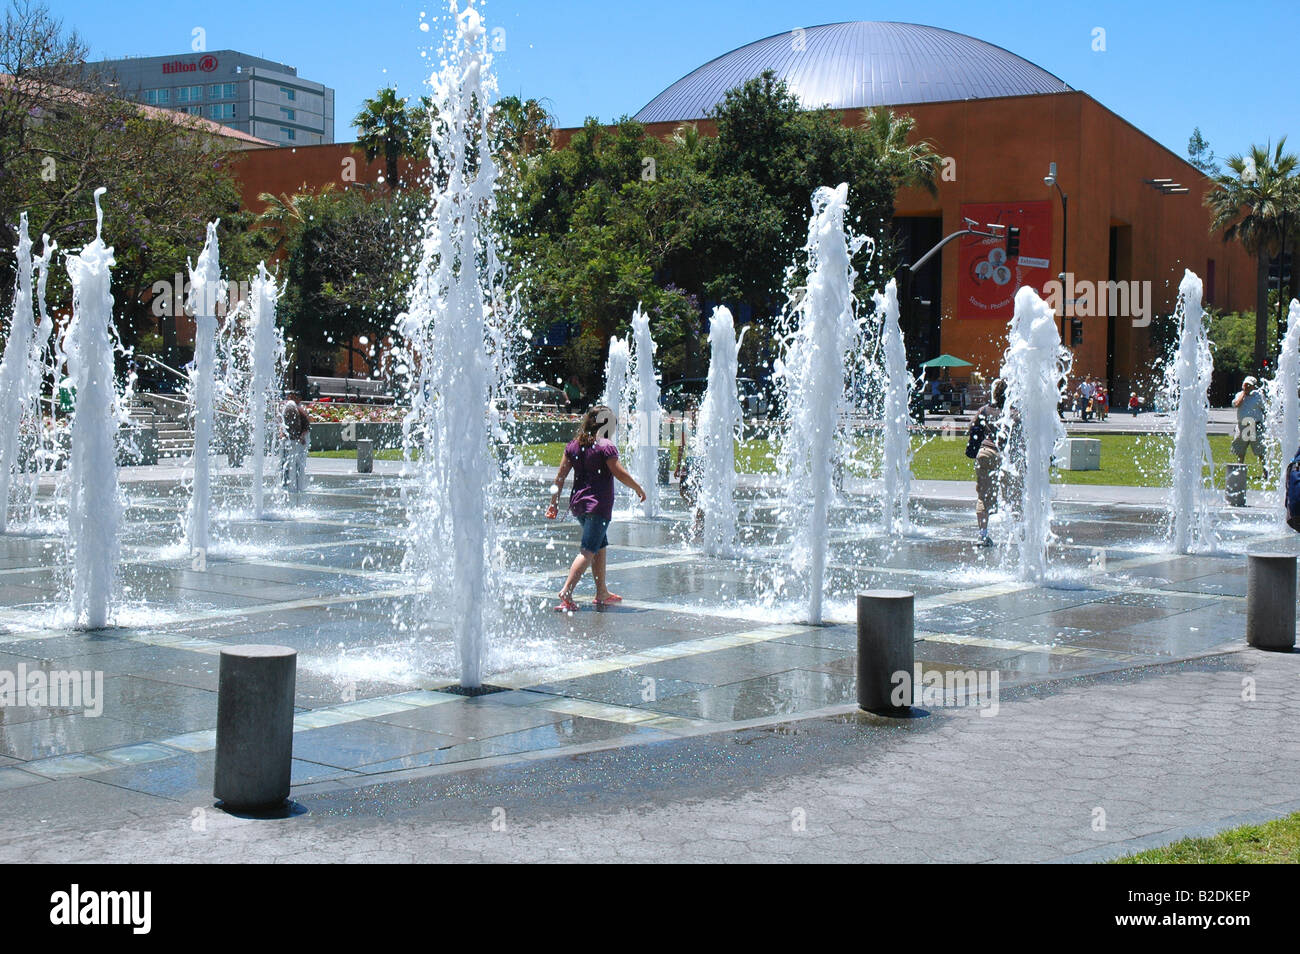 Rain Fountain, Topanga Plaza, Canoga Park, California